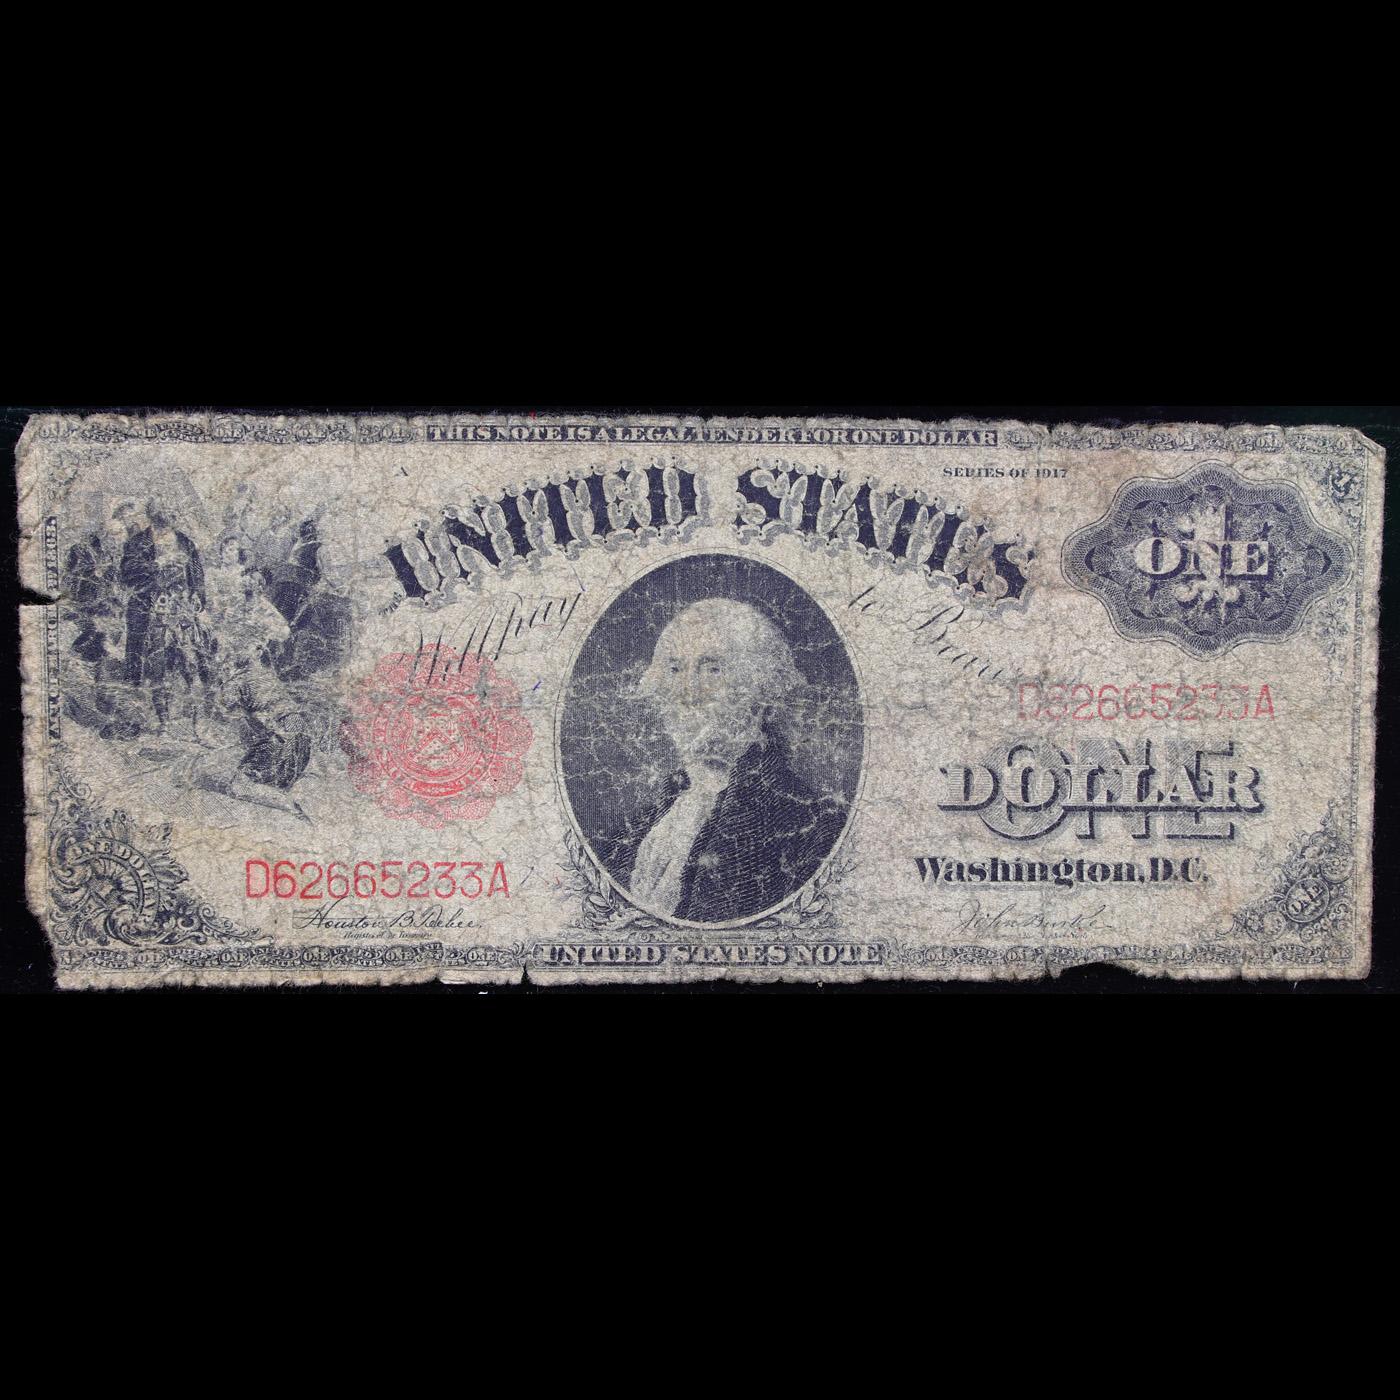 1917 $1 Large Size Legal Tender, Signatures of Burke & Teehee, FR36 Grades g, good